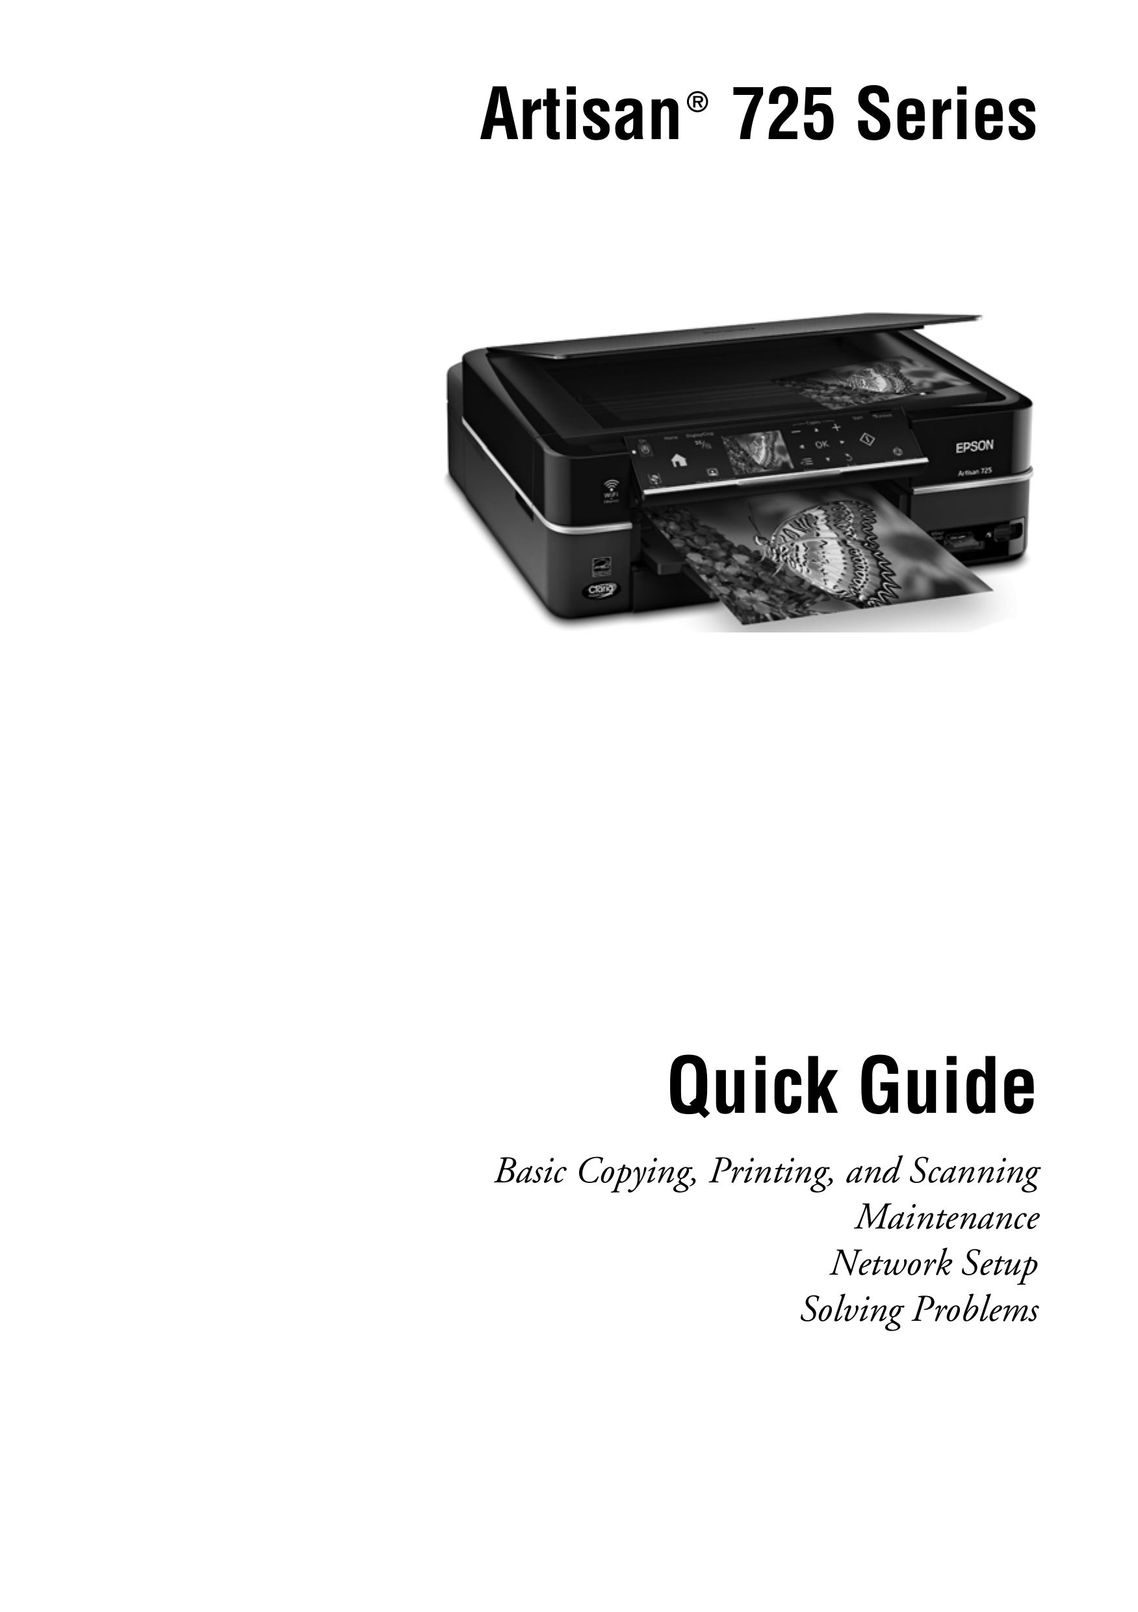 Garmin 725 All in One Printer User Manual